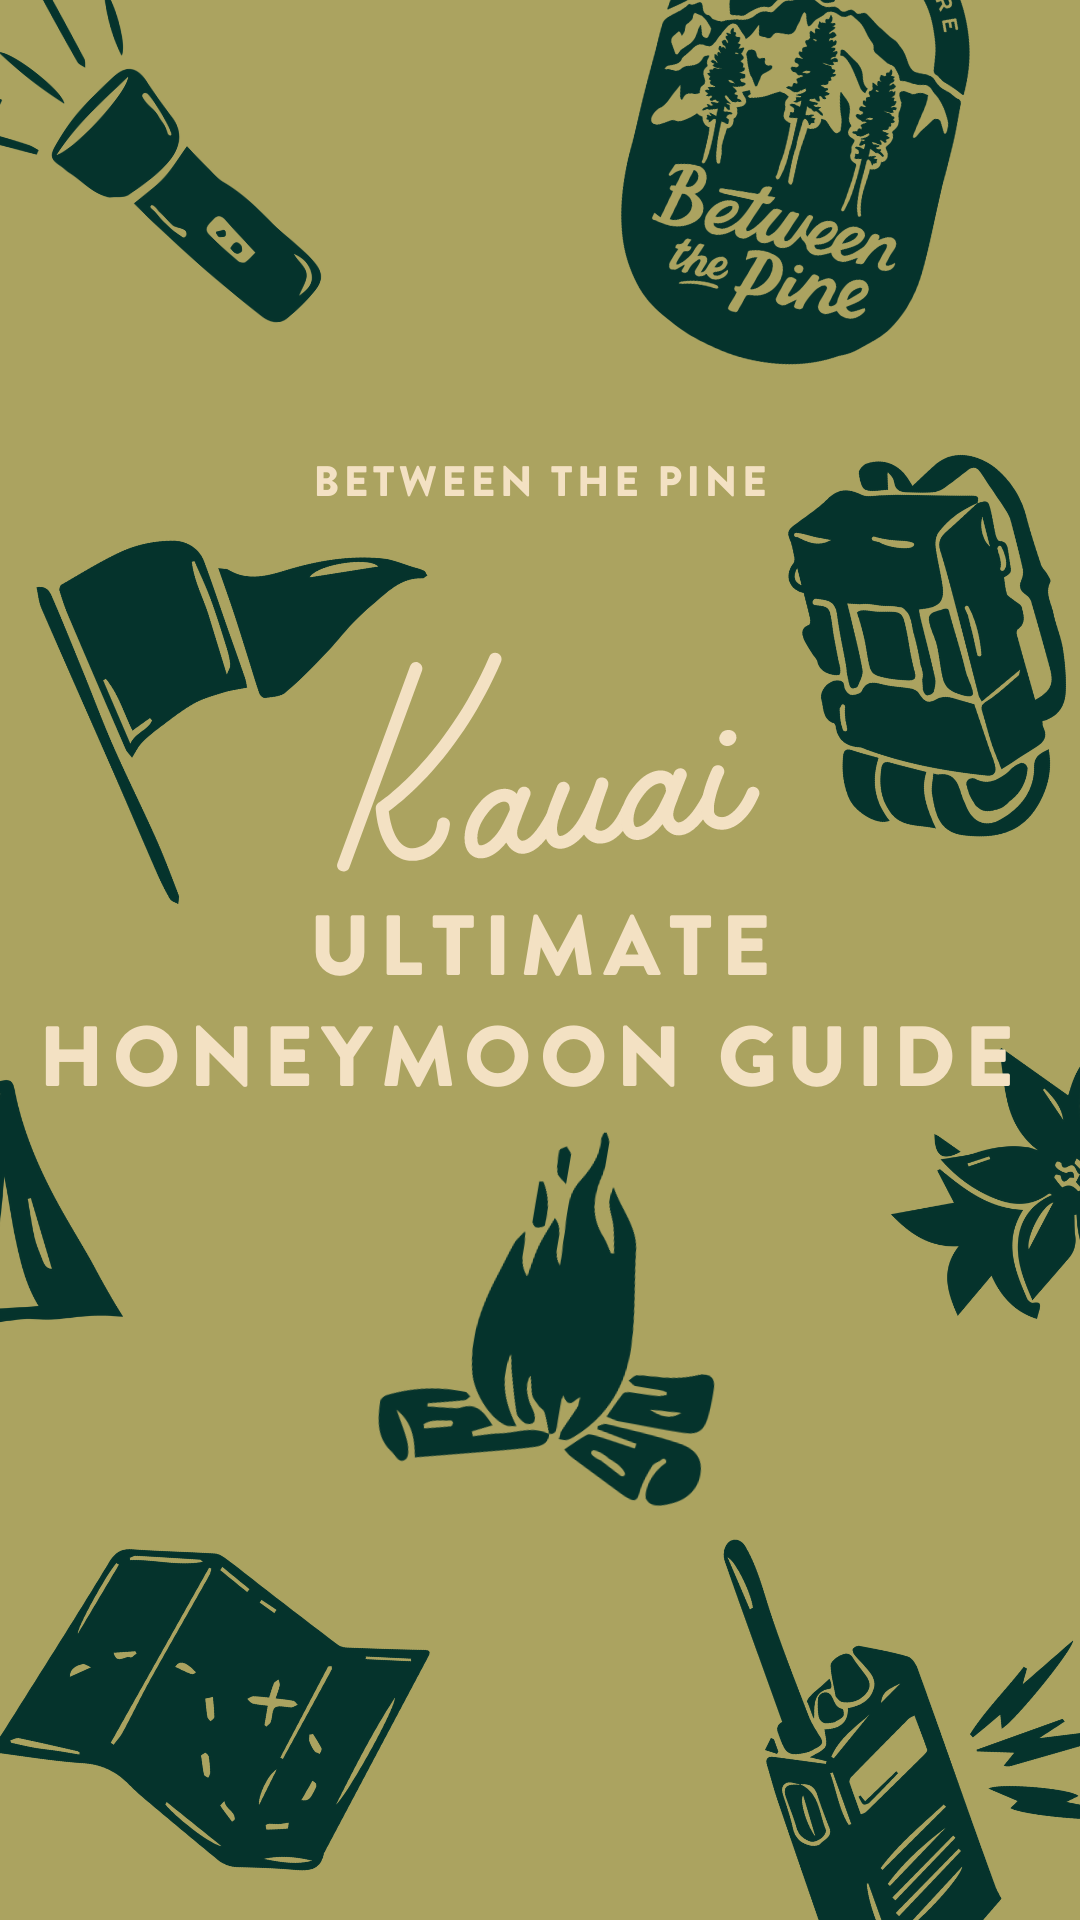 Kauai ultimate honeymoon guide.png